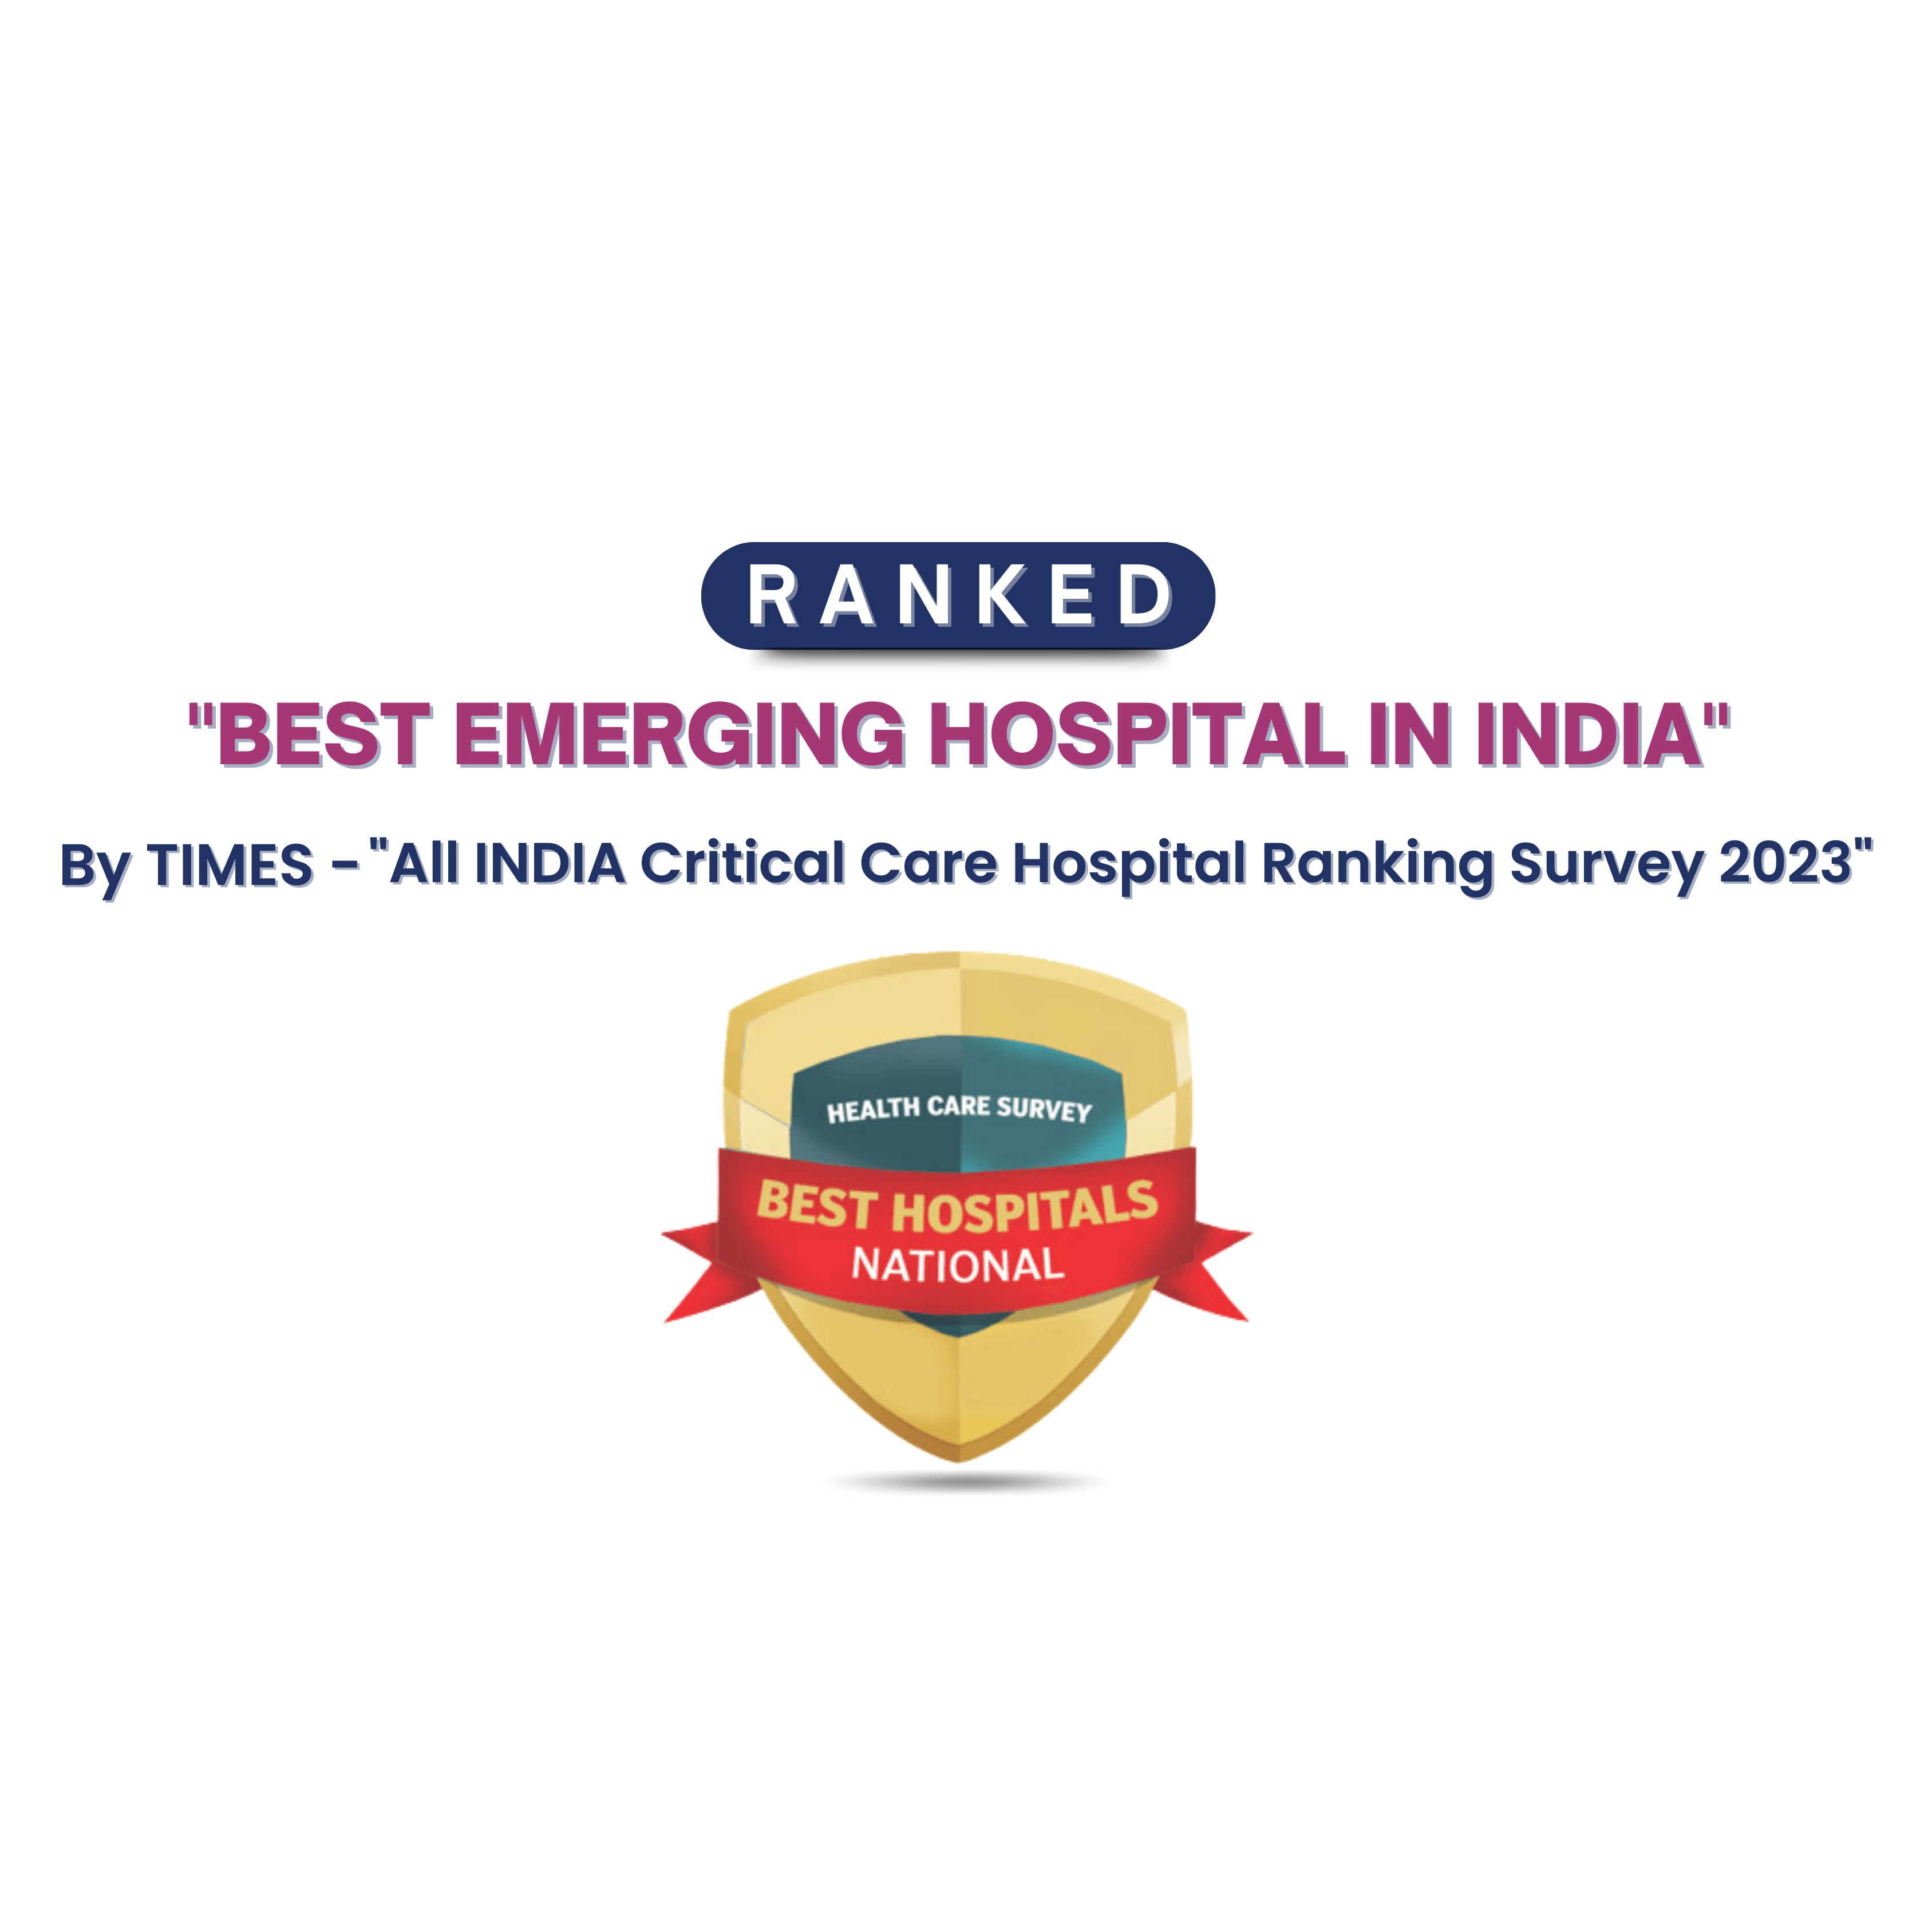 Best emerging hospital in India 2023